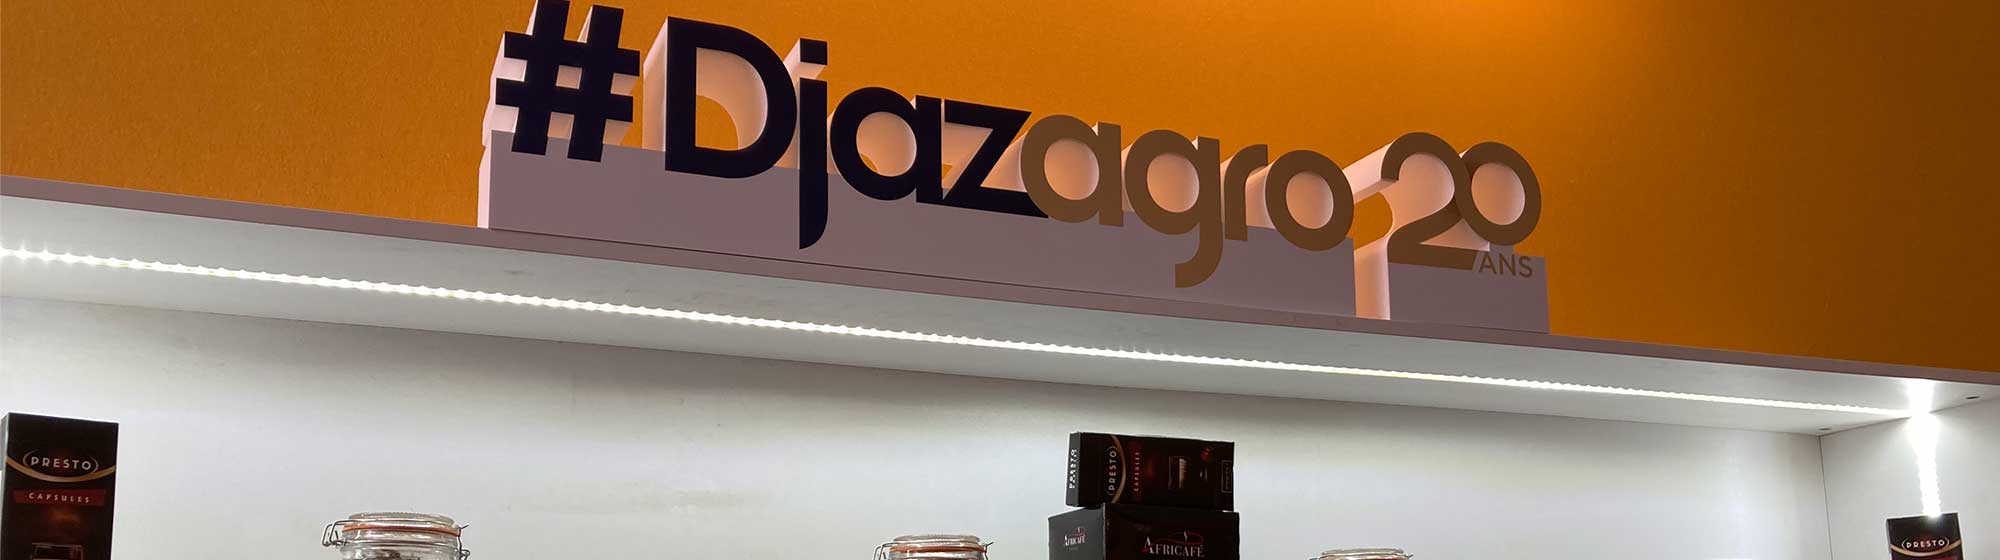 Djazagro logo and food products